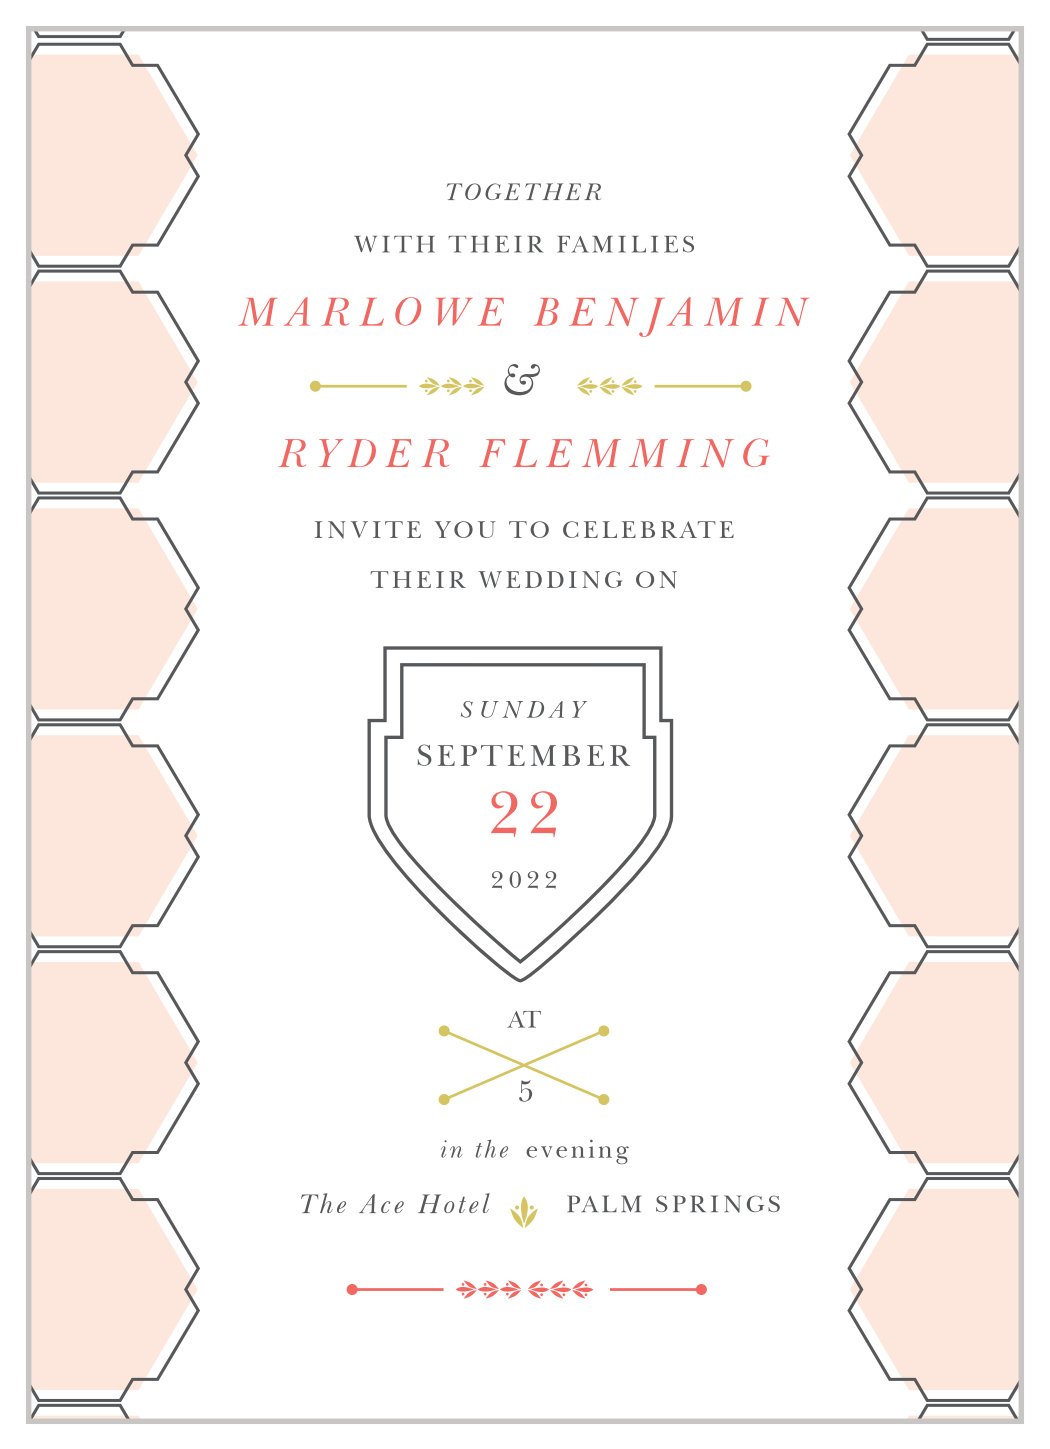 MaeMae's Marlowe Wedding Invitations